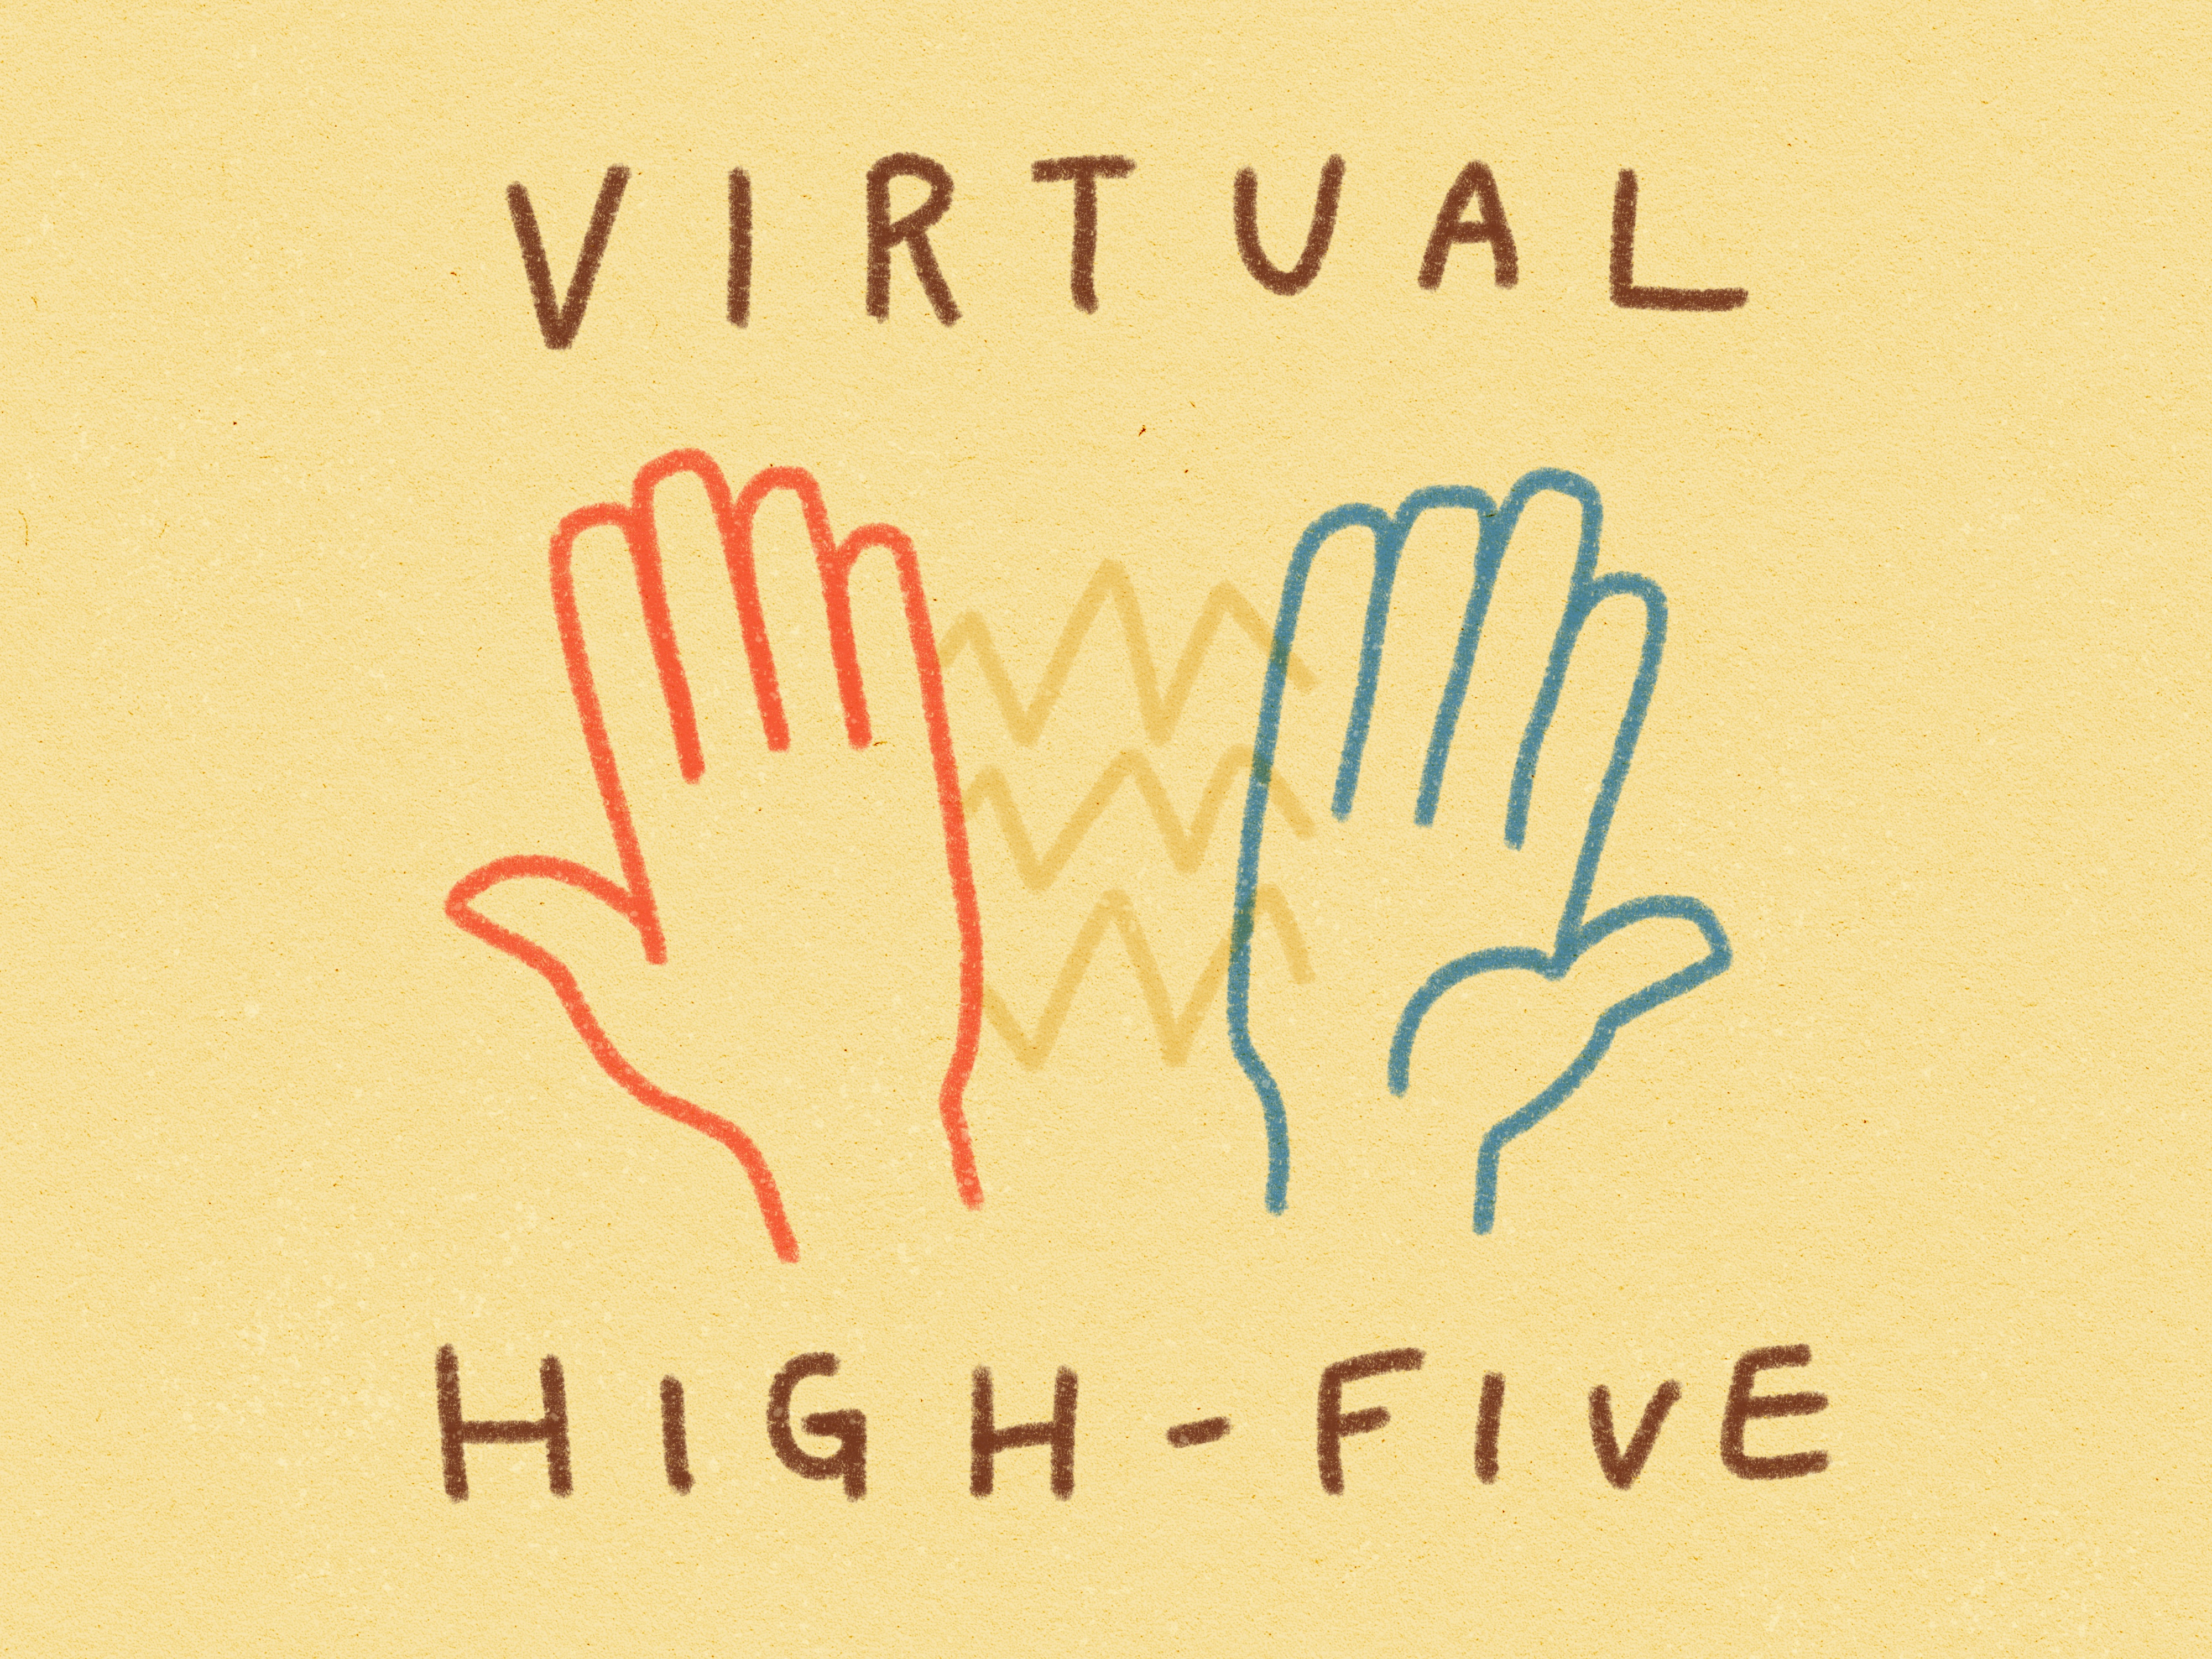 Be high five. High Five. Give a High Five. High Five картинка. High Five! Дай пять! (DVD).